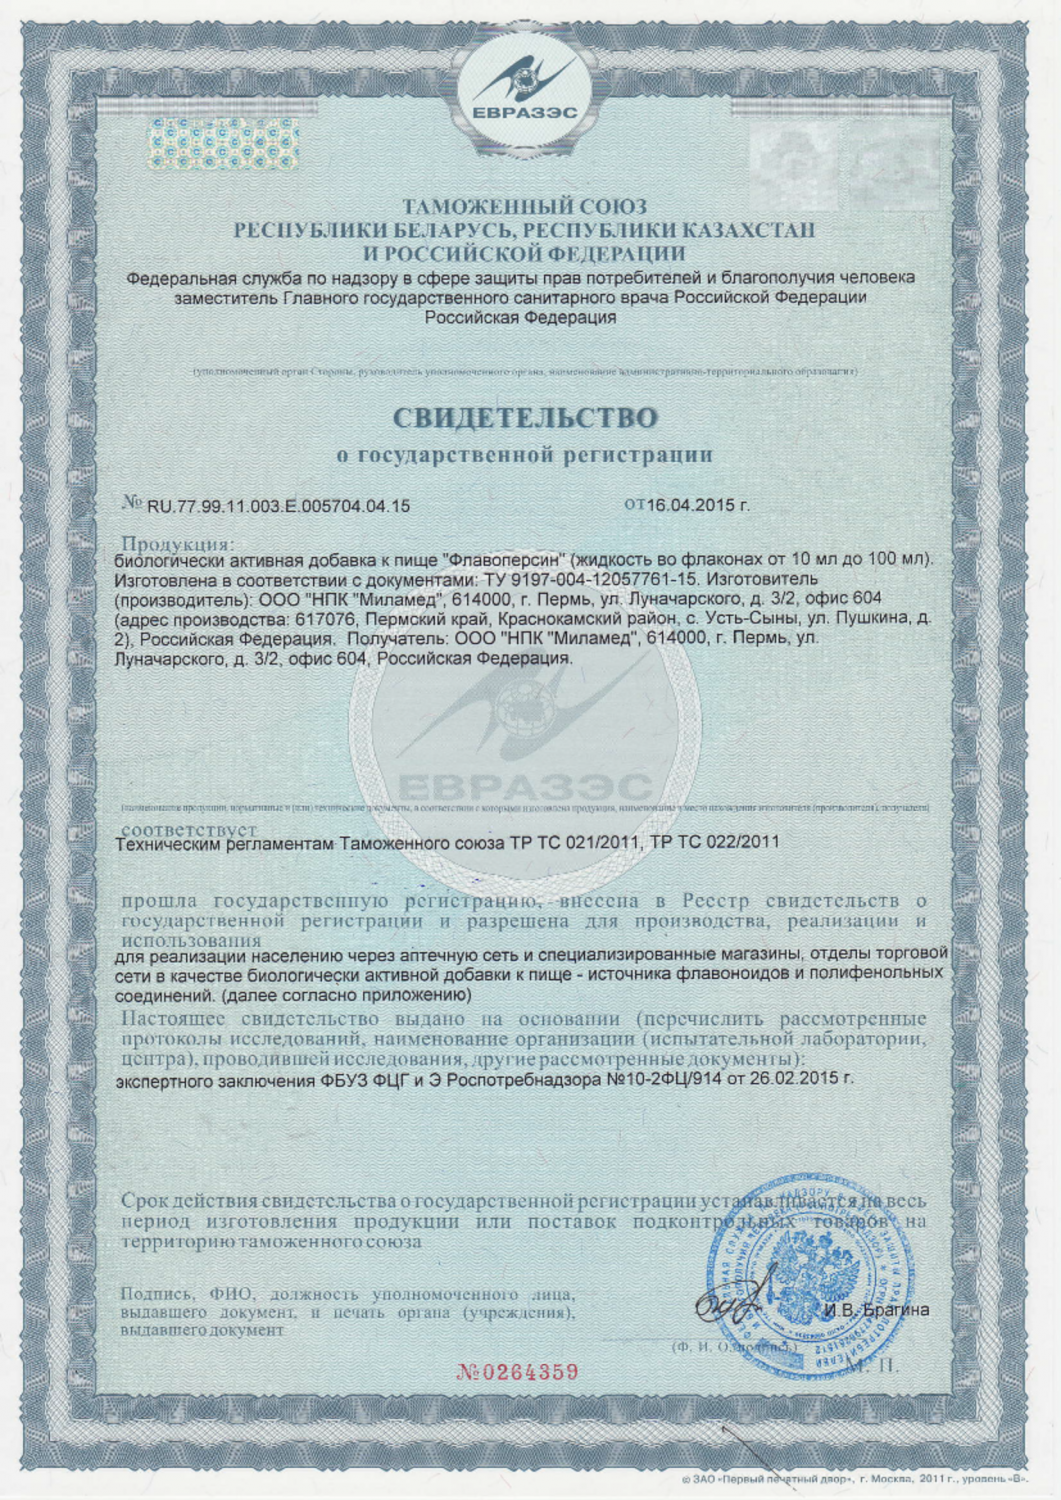 Certificate of State Registration for BAD “Flavopersin”